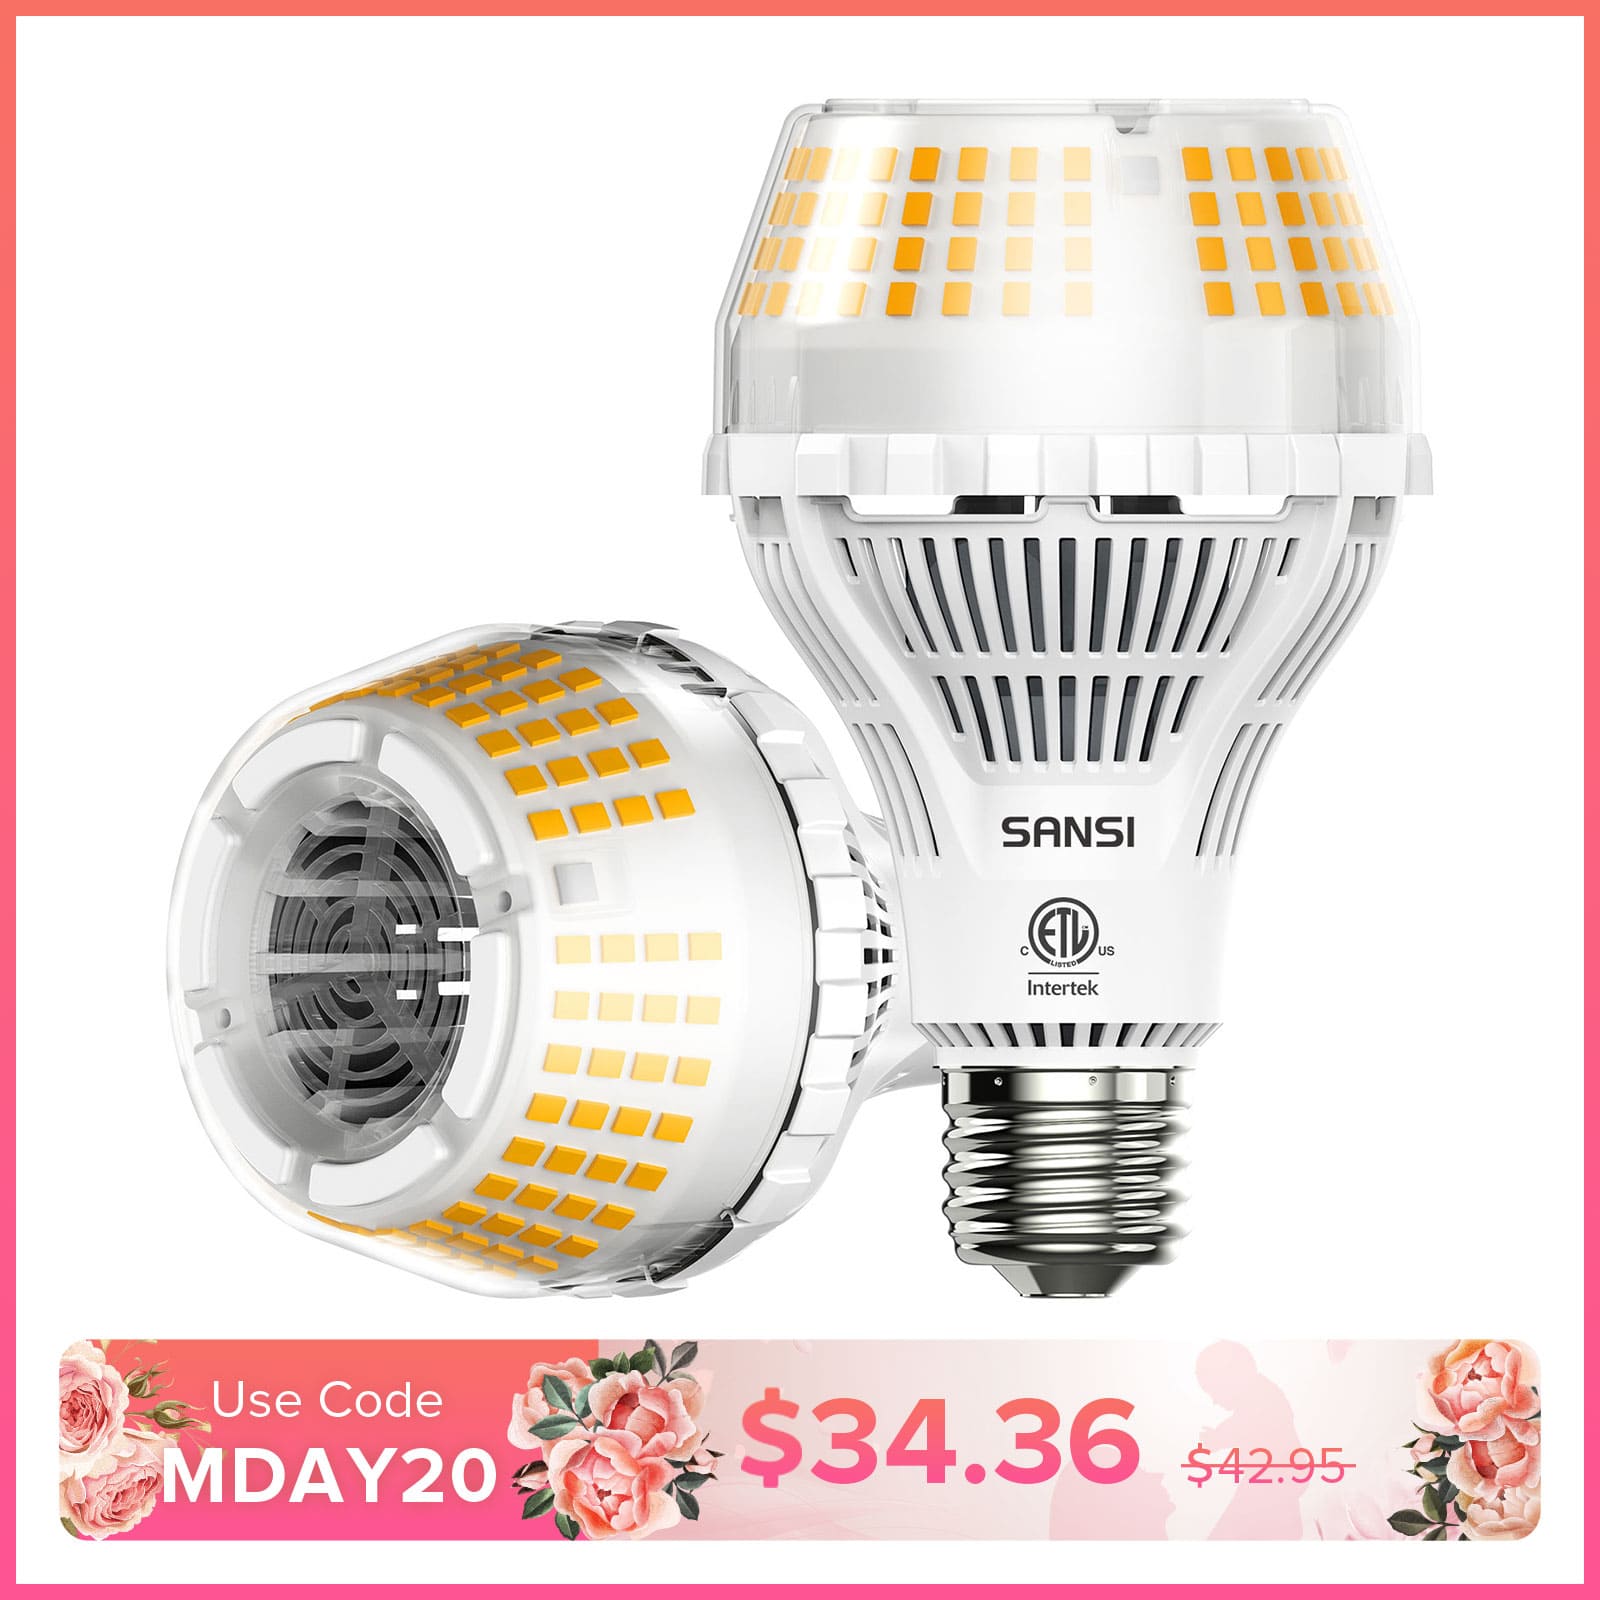 Upgraded A21 22W LED 3000K/5000K Light Bulb(US ONLY)